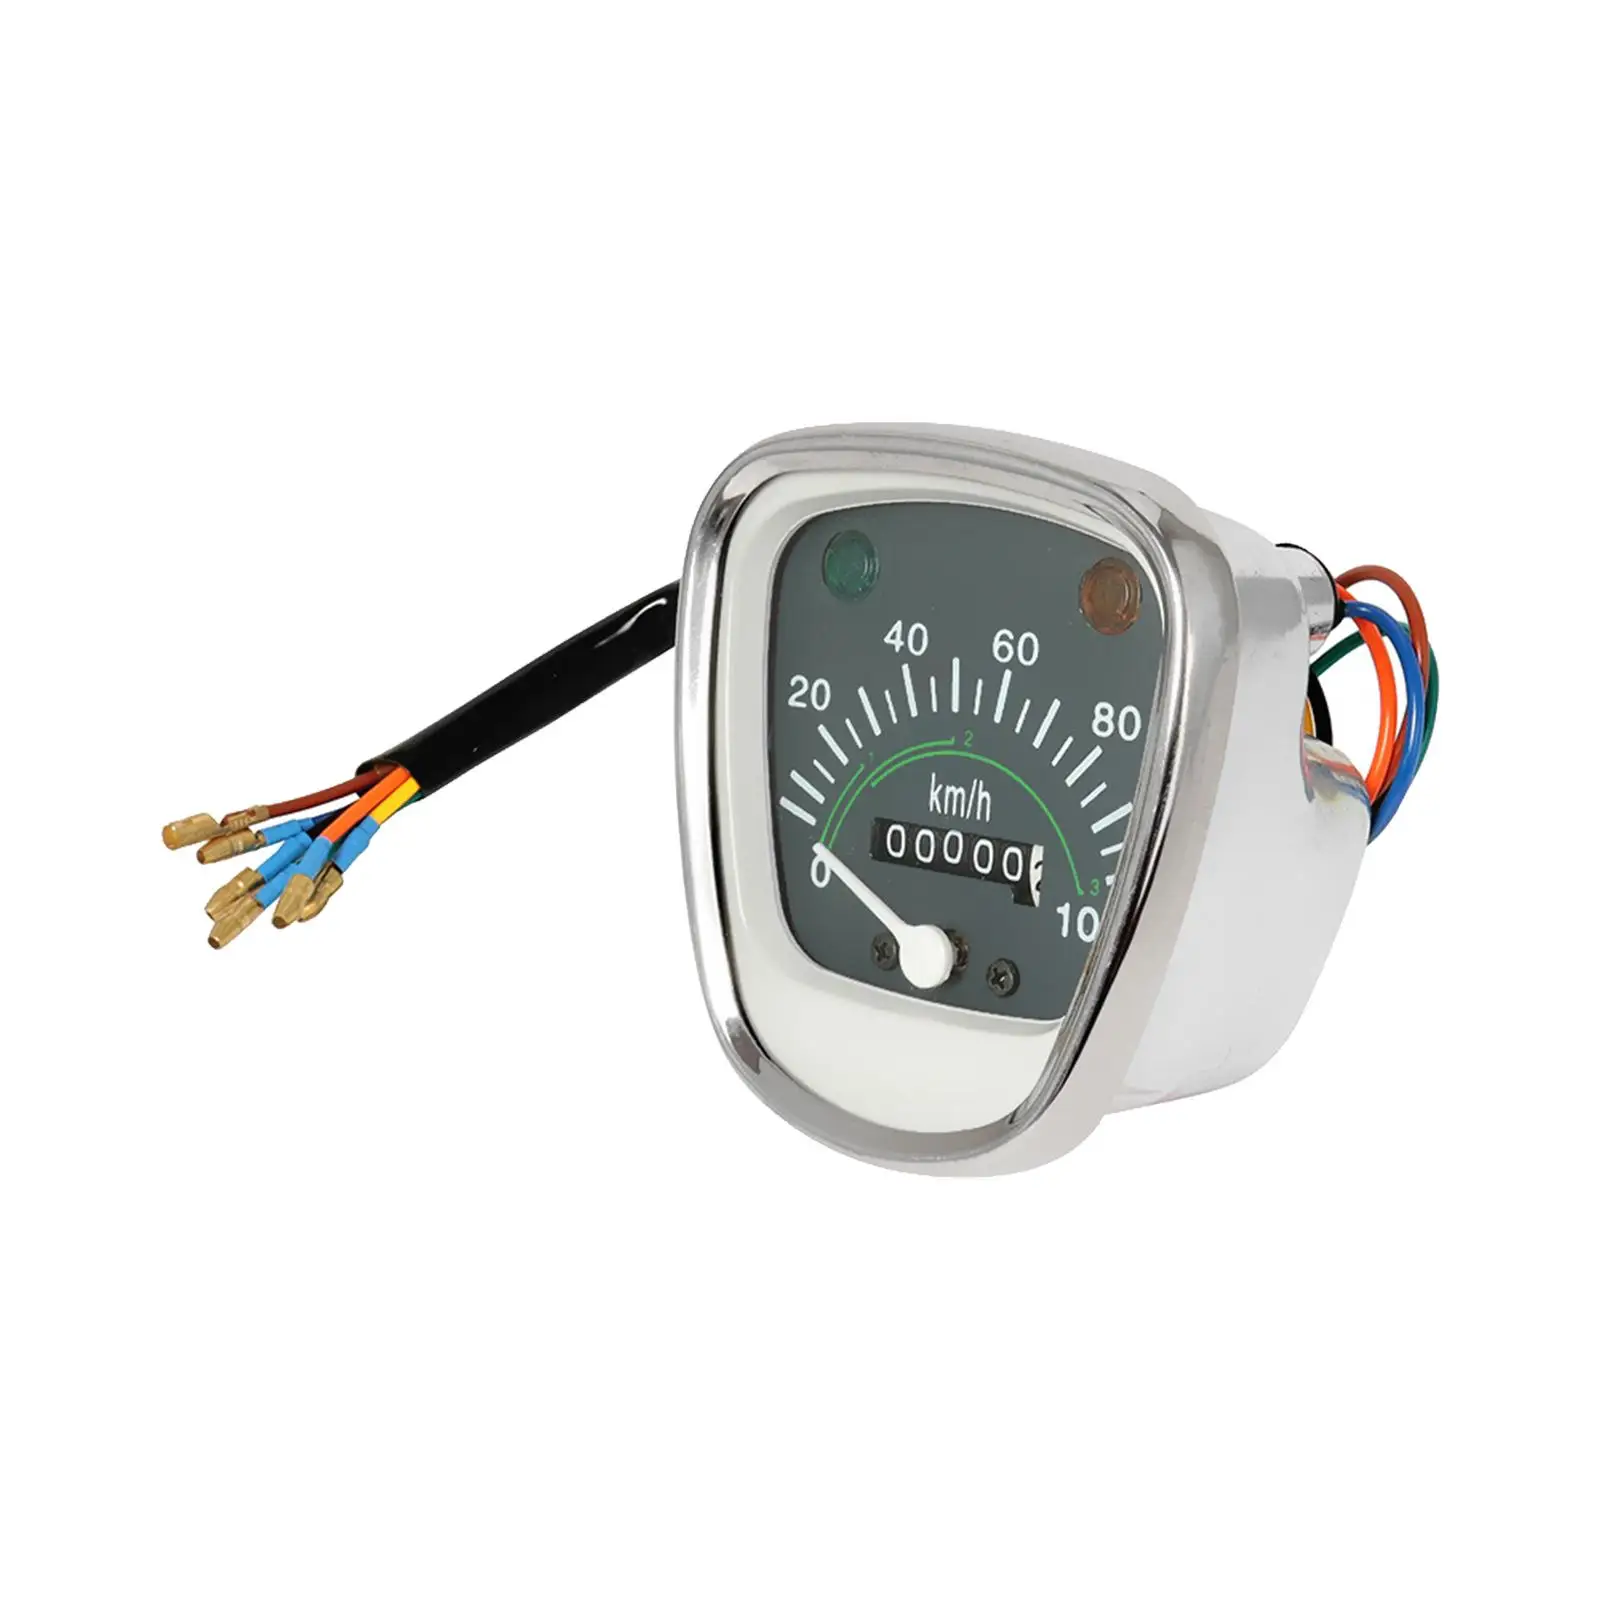 Motorbicycle Instrument Accessories Speedometer Gauge Backlight 1.7W Bulb